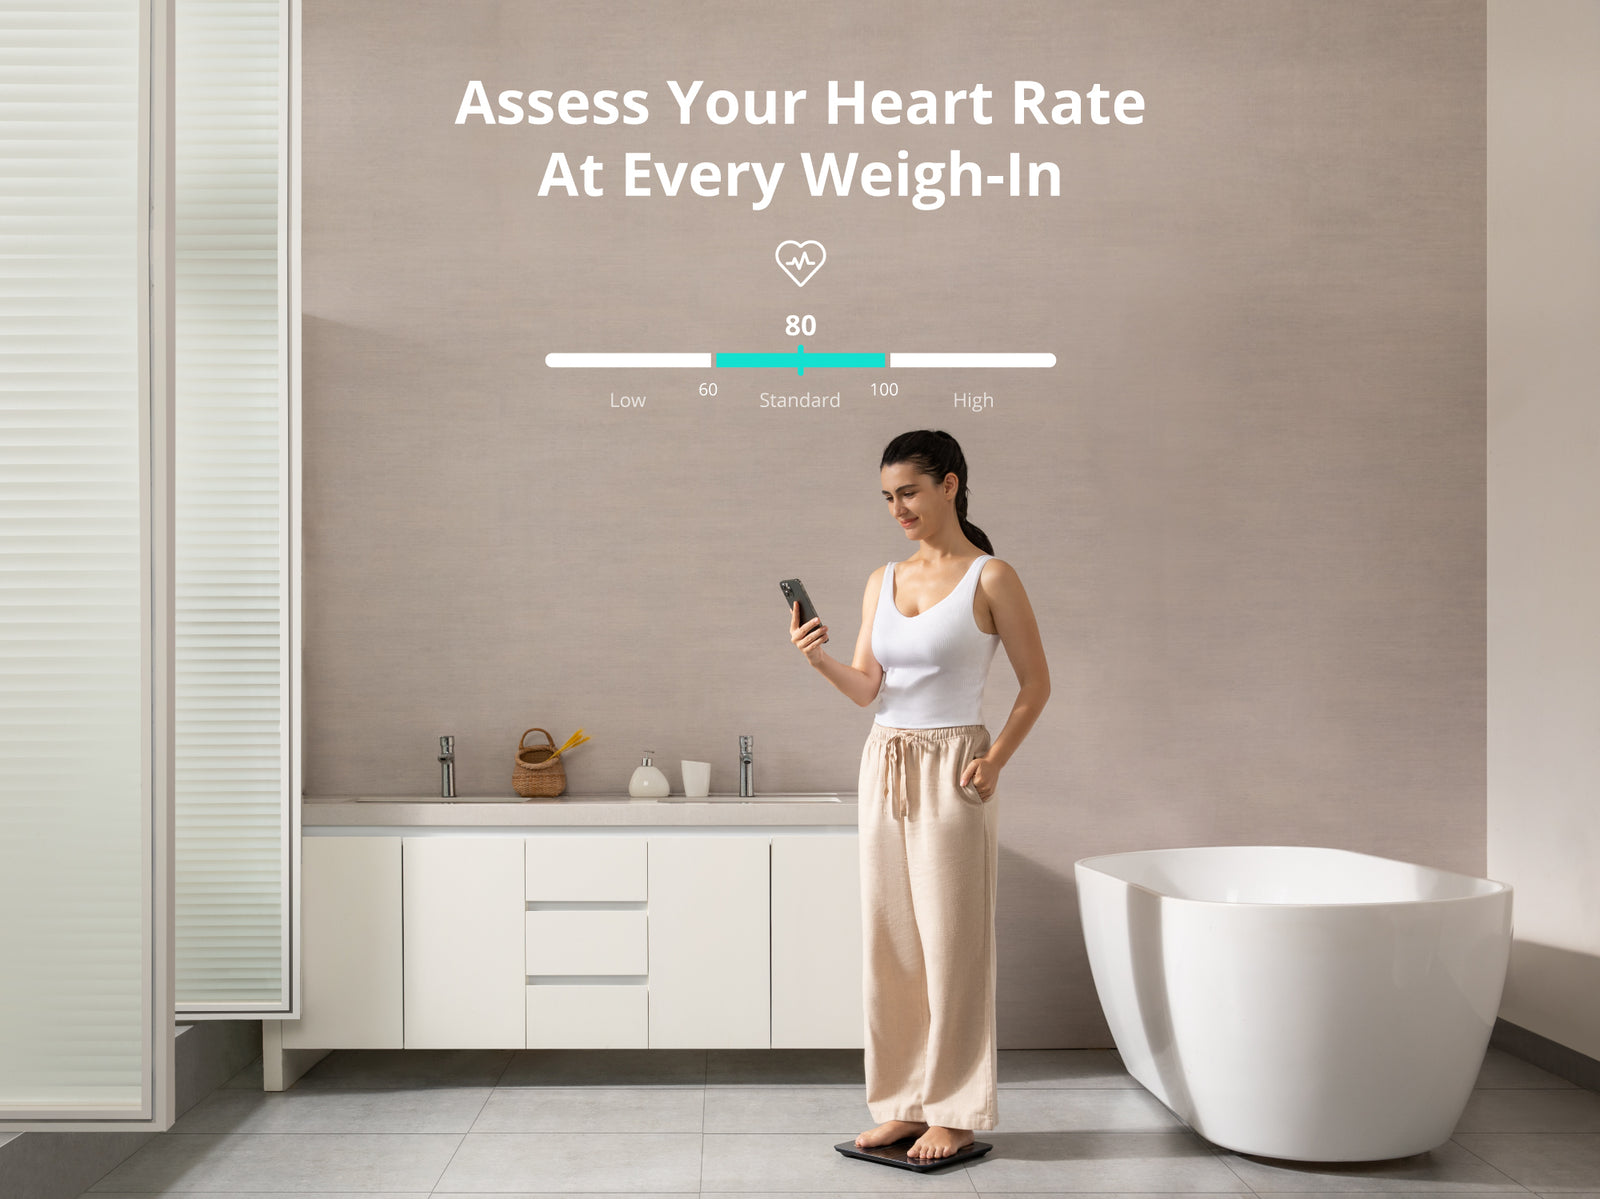 Eufy Smart Scale P2 Pro Review: Heart Rate & 3D Modelling - Tech Advisor